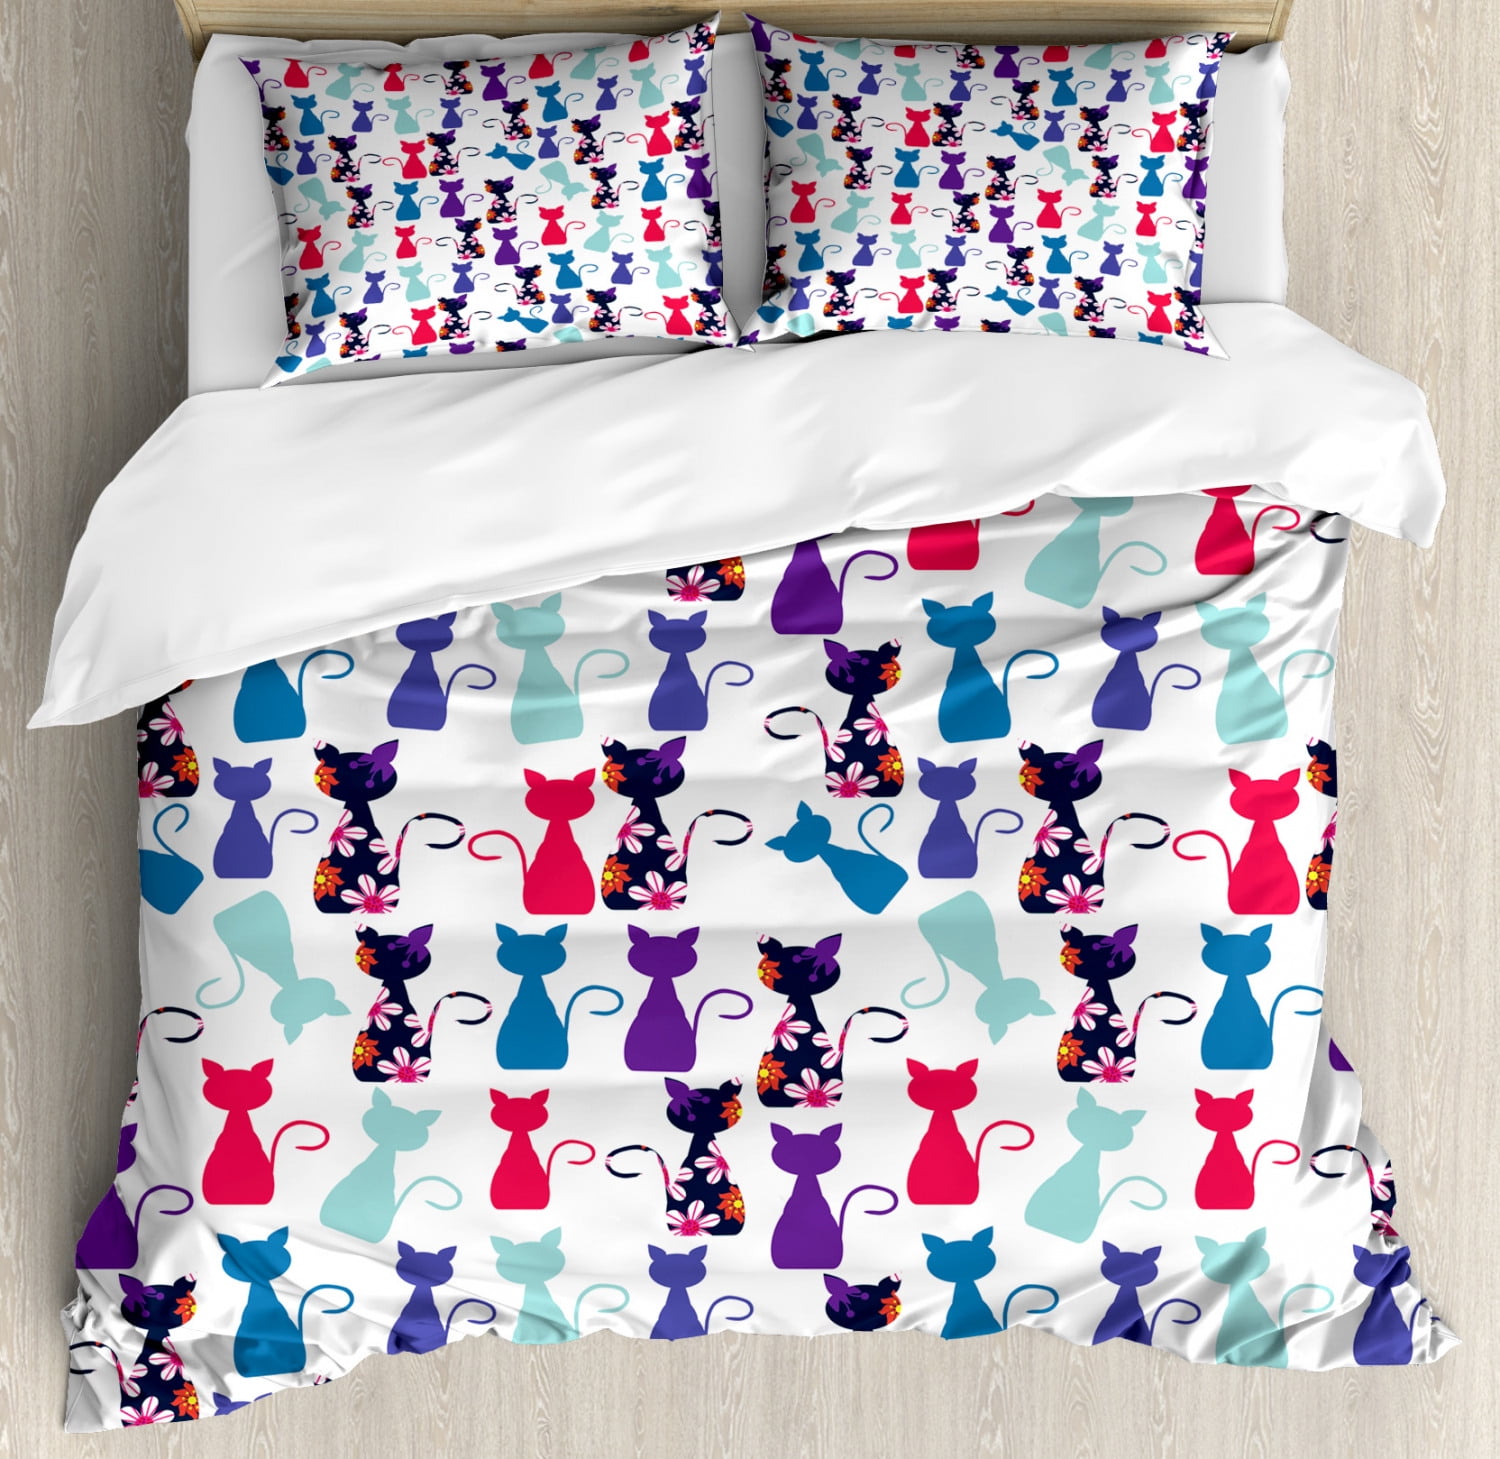 Scottish Fold Kittens Print Animal Quilted Bedspread & Pillow Shams Set 